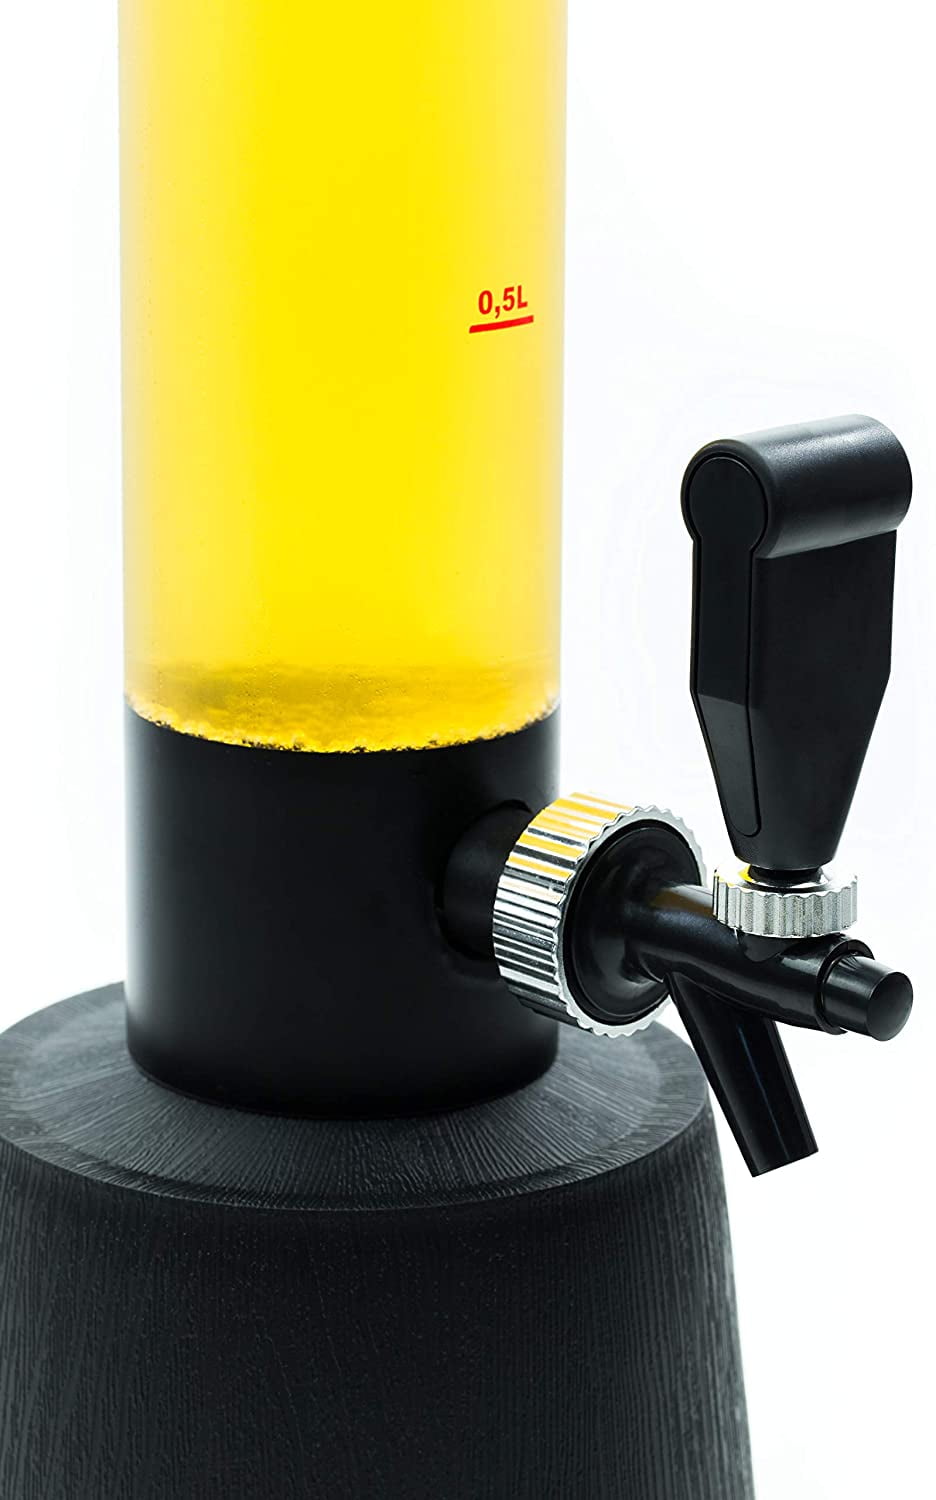 Beer Tower 3L/100Oz - Beverage Dispenser with Spigot & Ice Tube